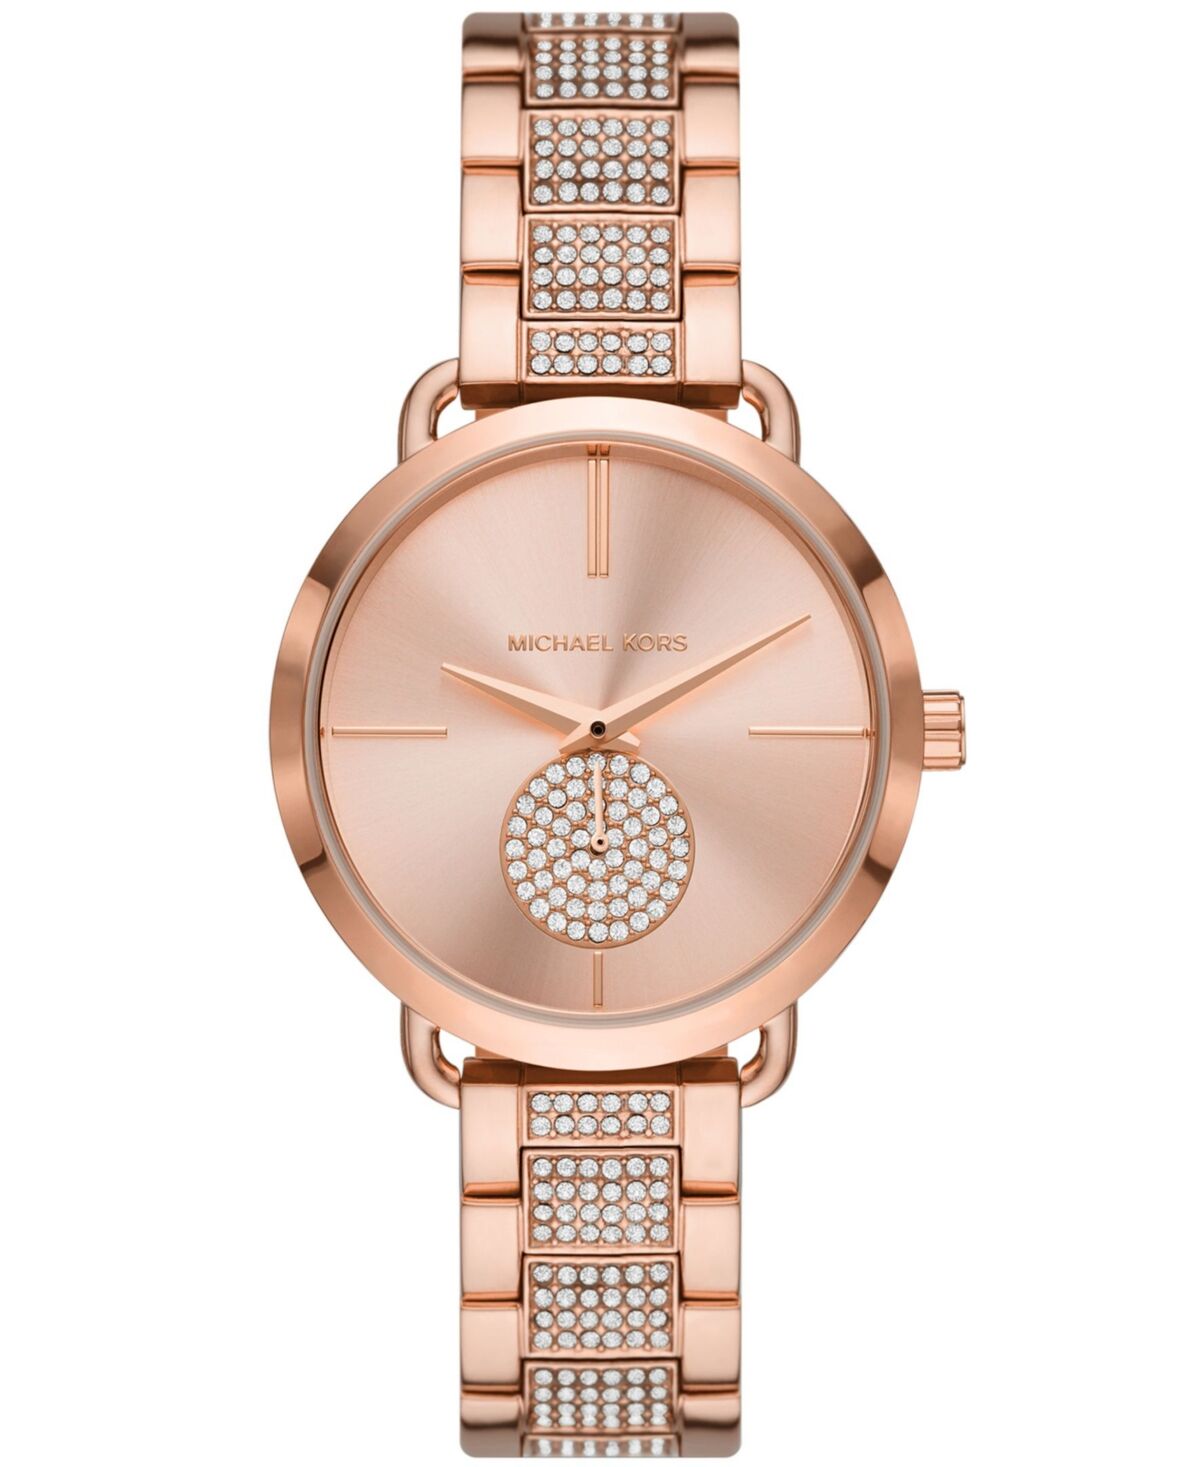 Michael Kors Women's Portia Rose Gold-Tone Stainless Steel Bracelet Watch, 36mm - Rose Gold-Tone